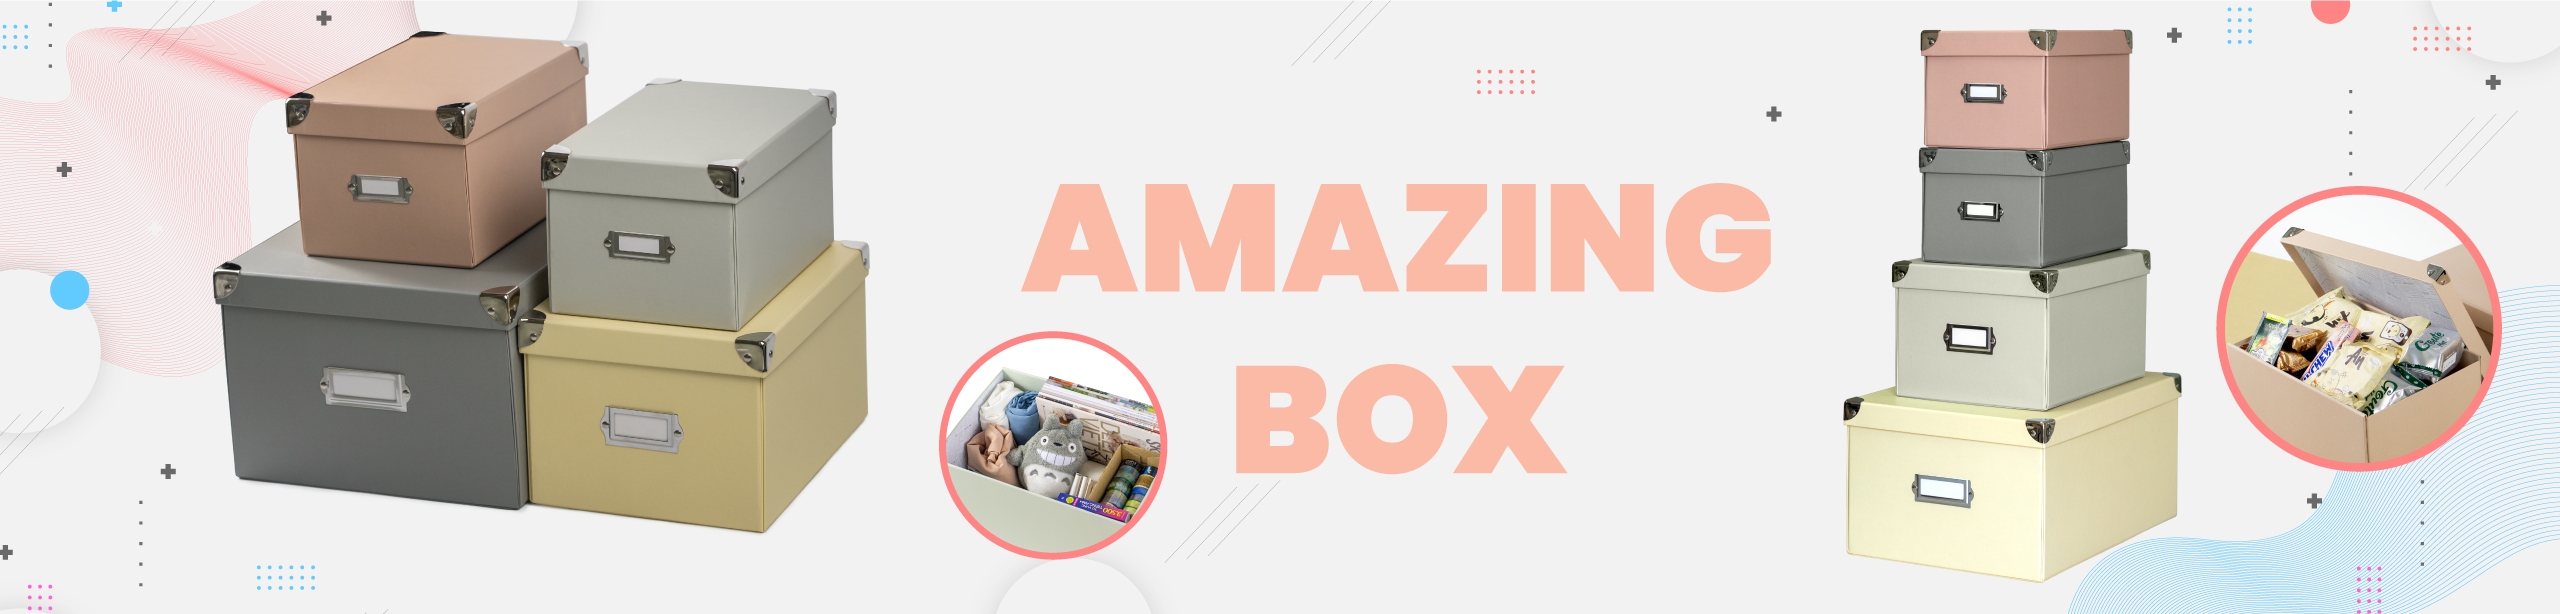 Amazing Box